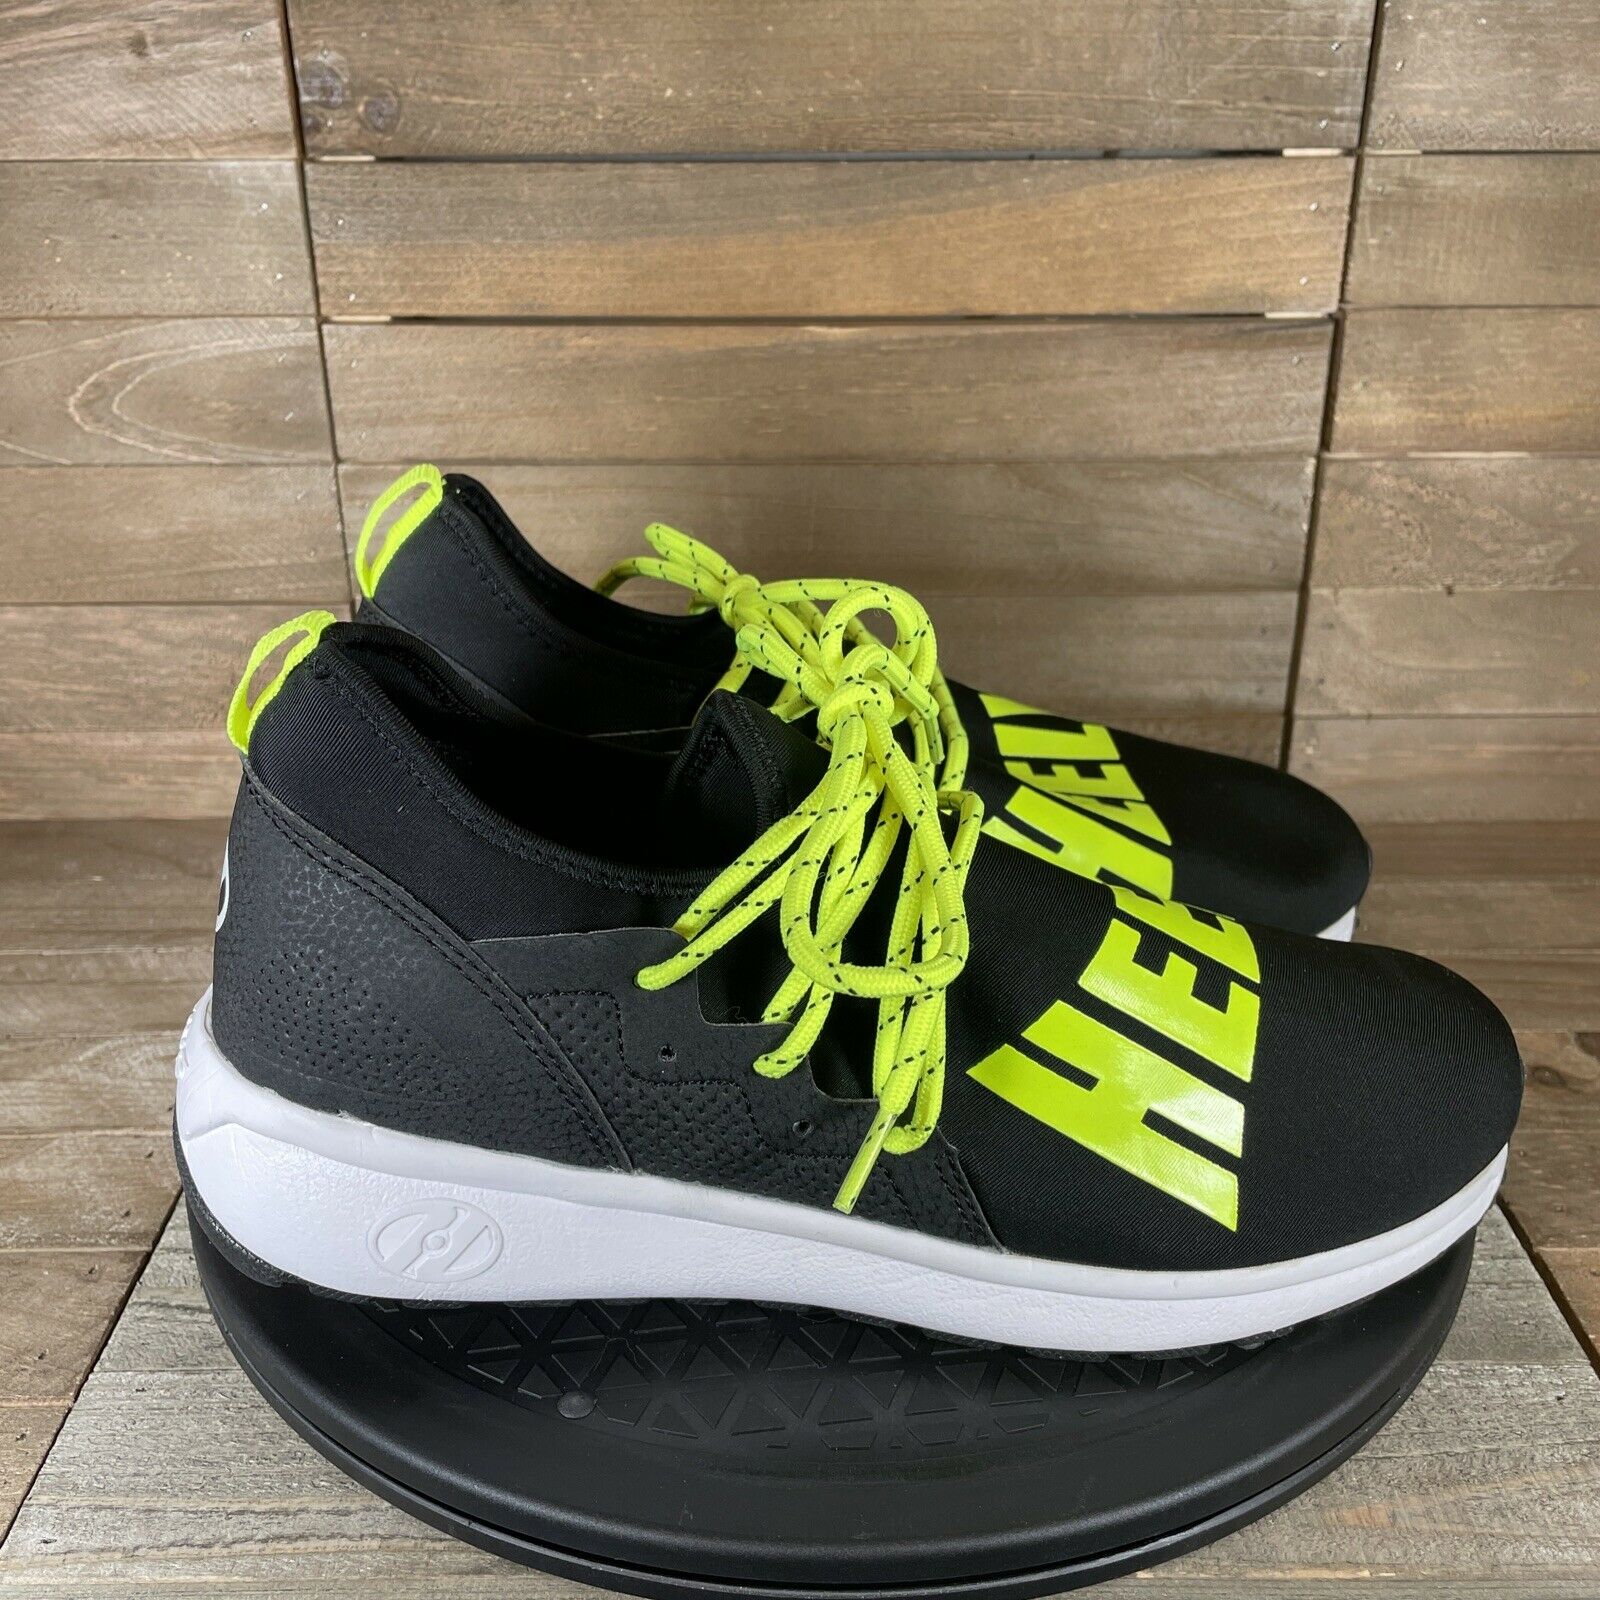 Heelys Navigator Skate Shoes Mens Black and Neon Green Wheels Size Adult 8